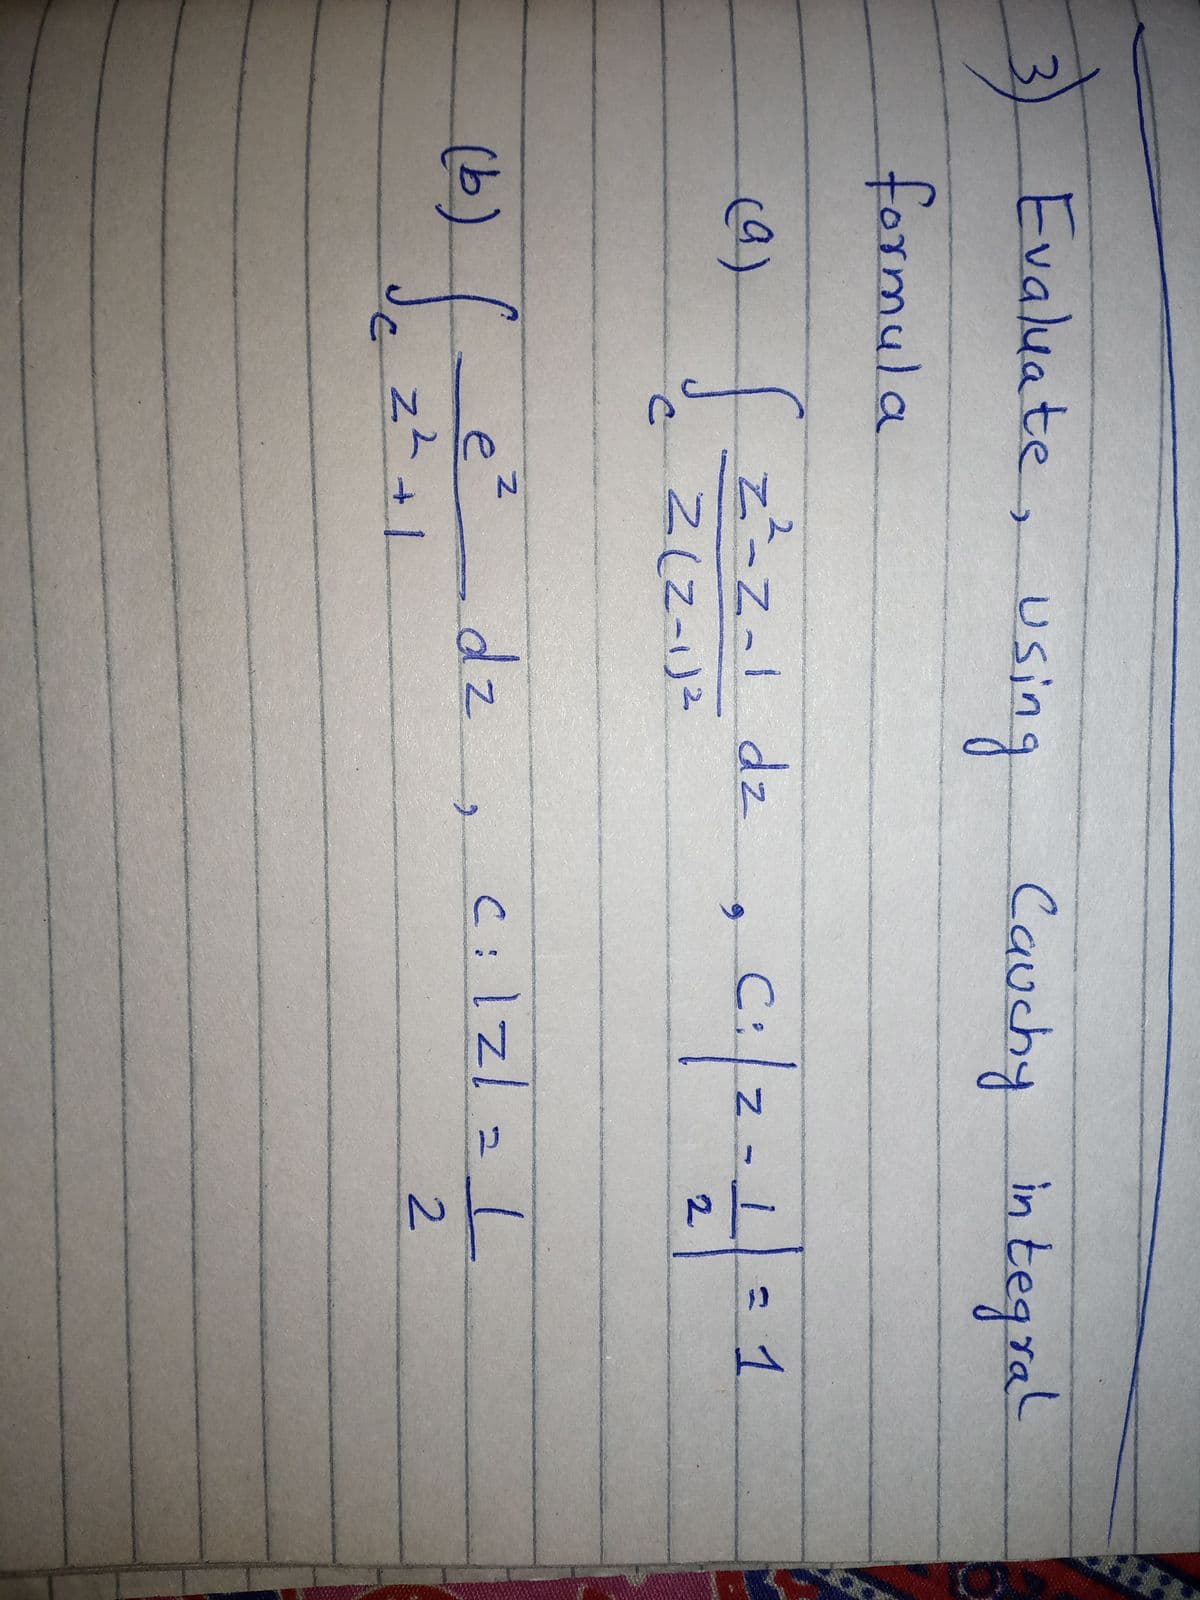 3) Evaluate, using
Cauchy integral
->
formula
C:
:2-
=1
%3D
(a) zZal dz
6.
2.
(b)t
e²
dz
2.
